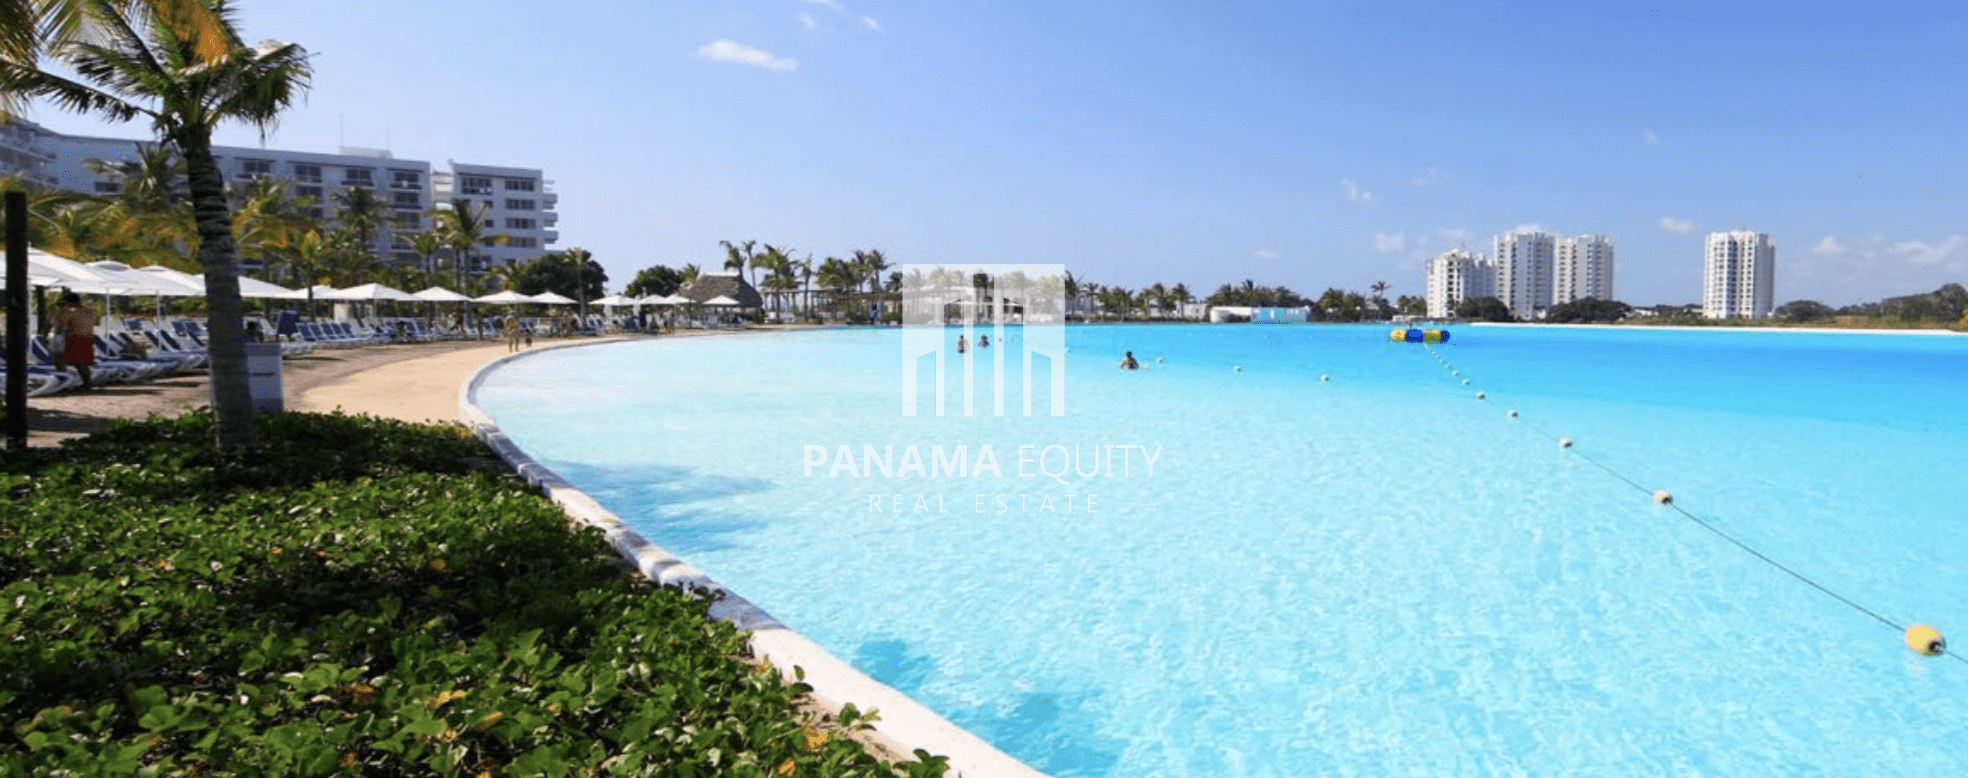 playa-blanca-resort-swimming-pool